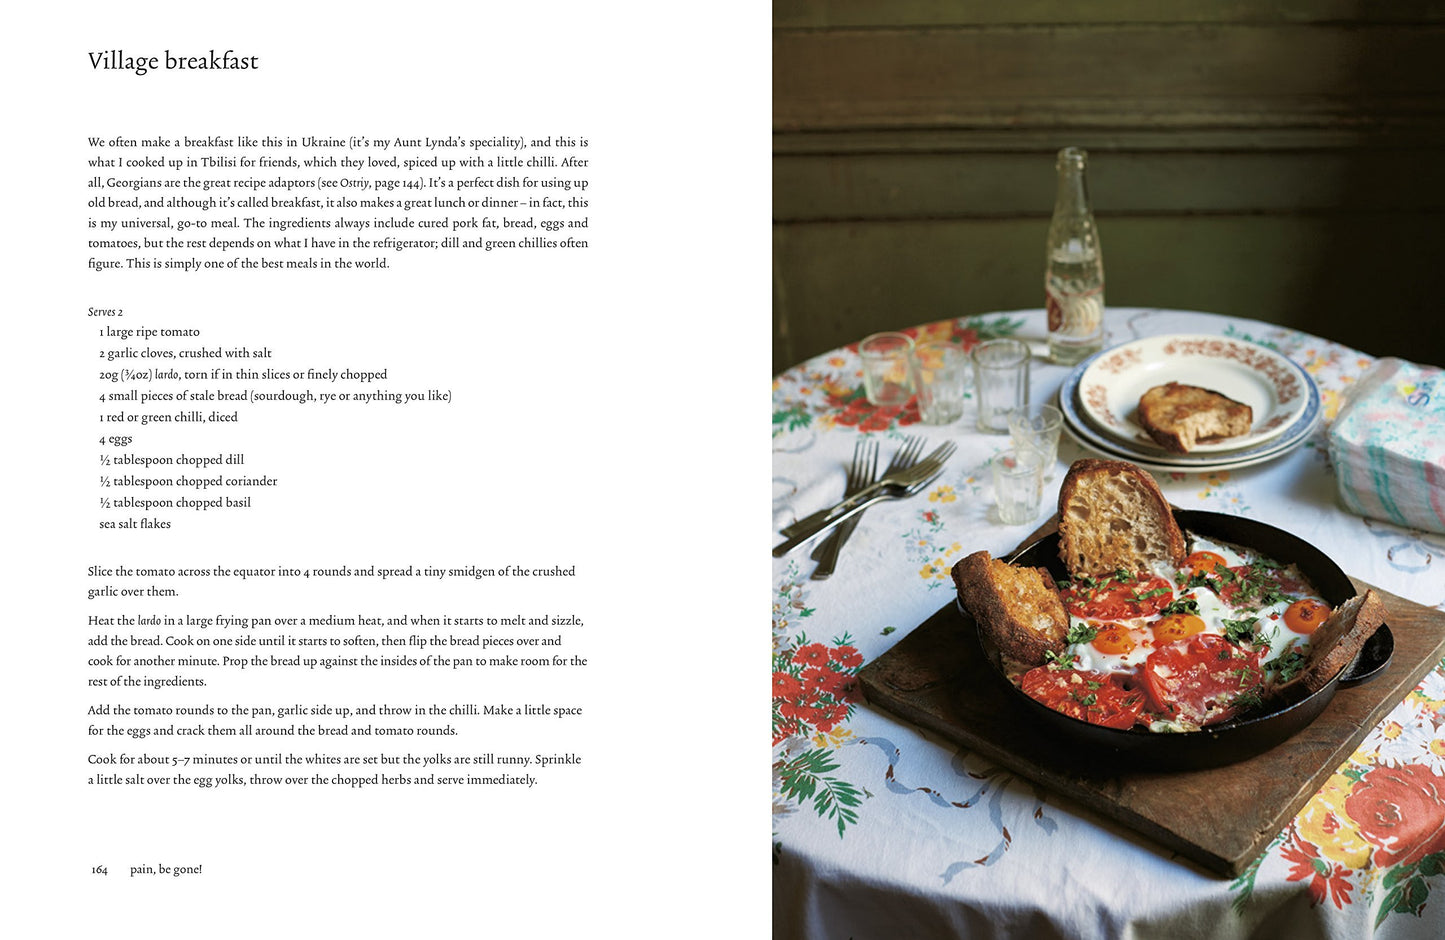 Kaukasis The Cookbook: The culinary journey through Georgia, Azerbaijan &amp; beyond